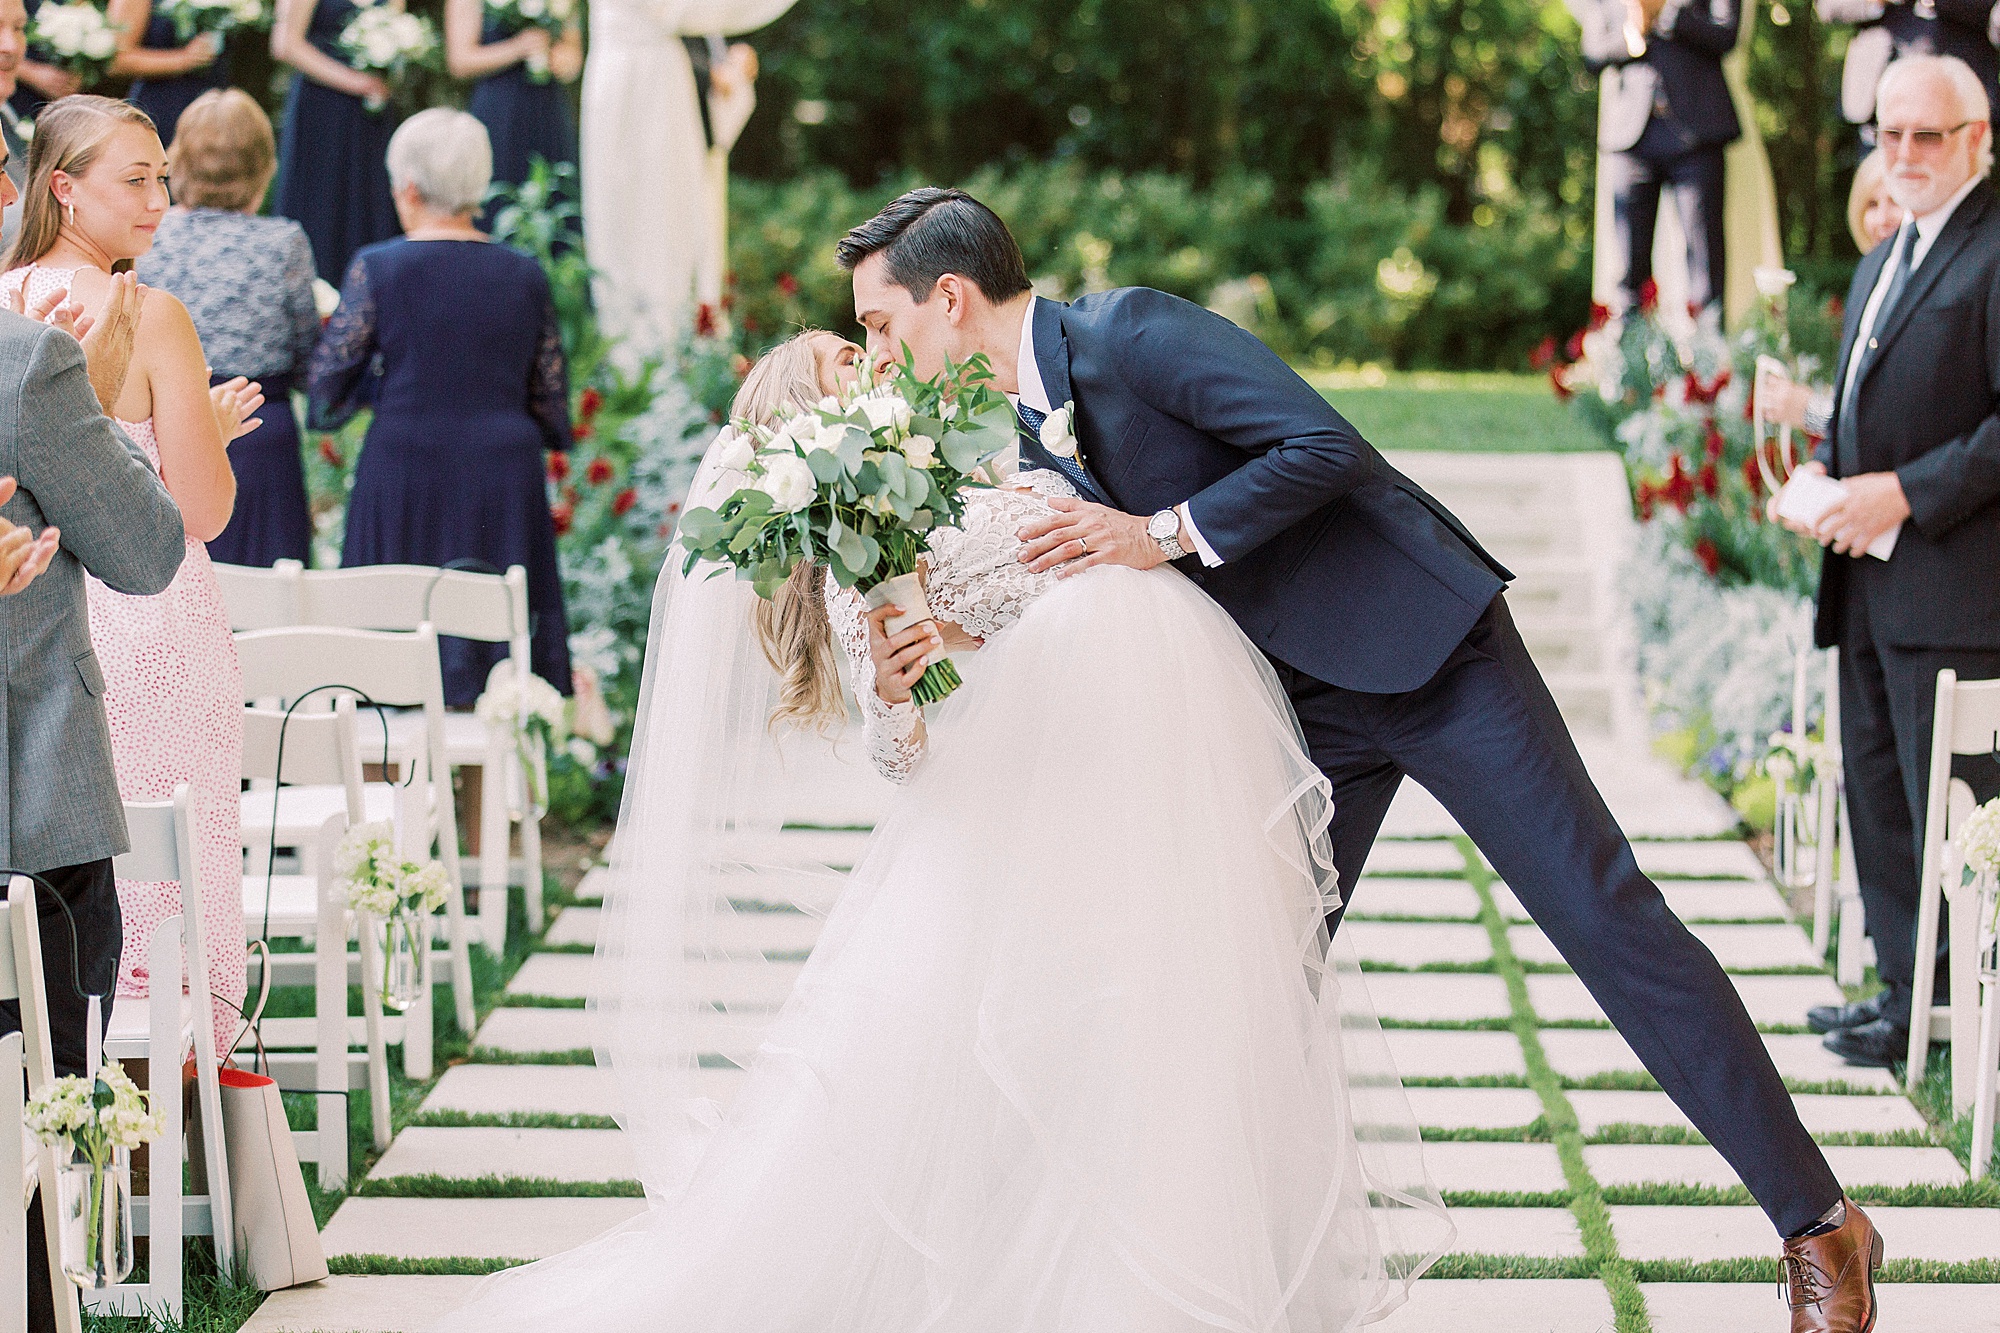 groom kisses bride at end of aisle during garden wedding ceremony at Separk Mansion